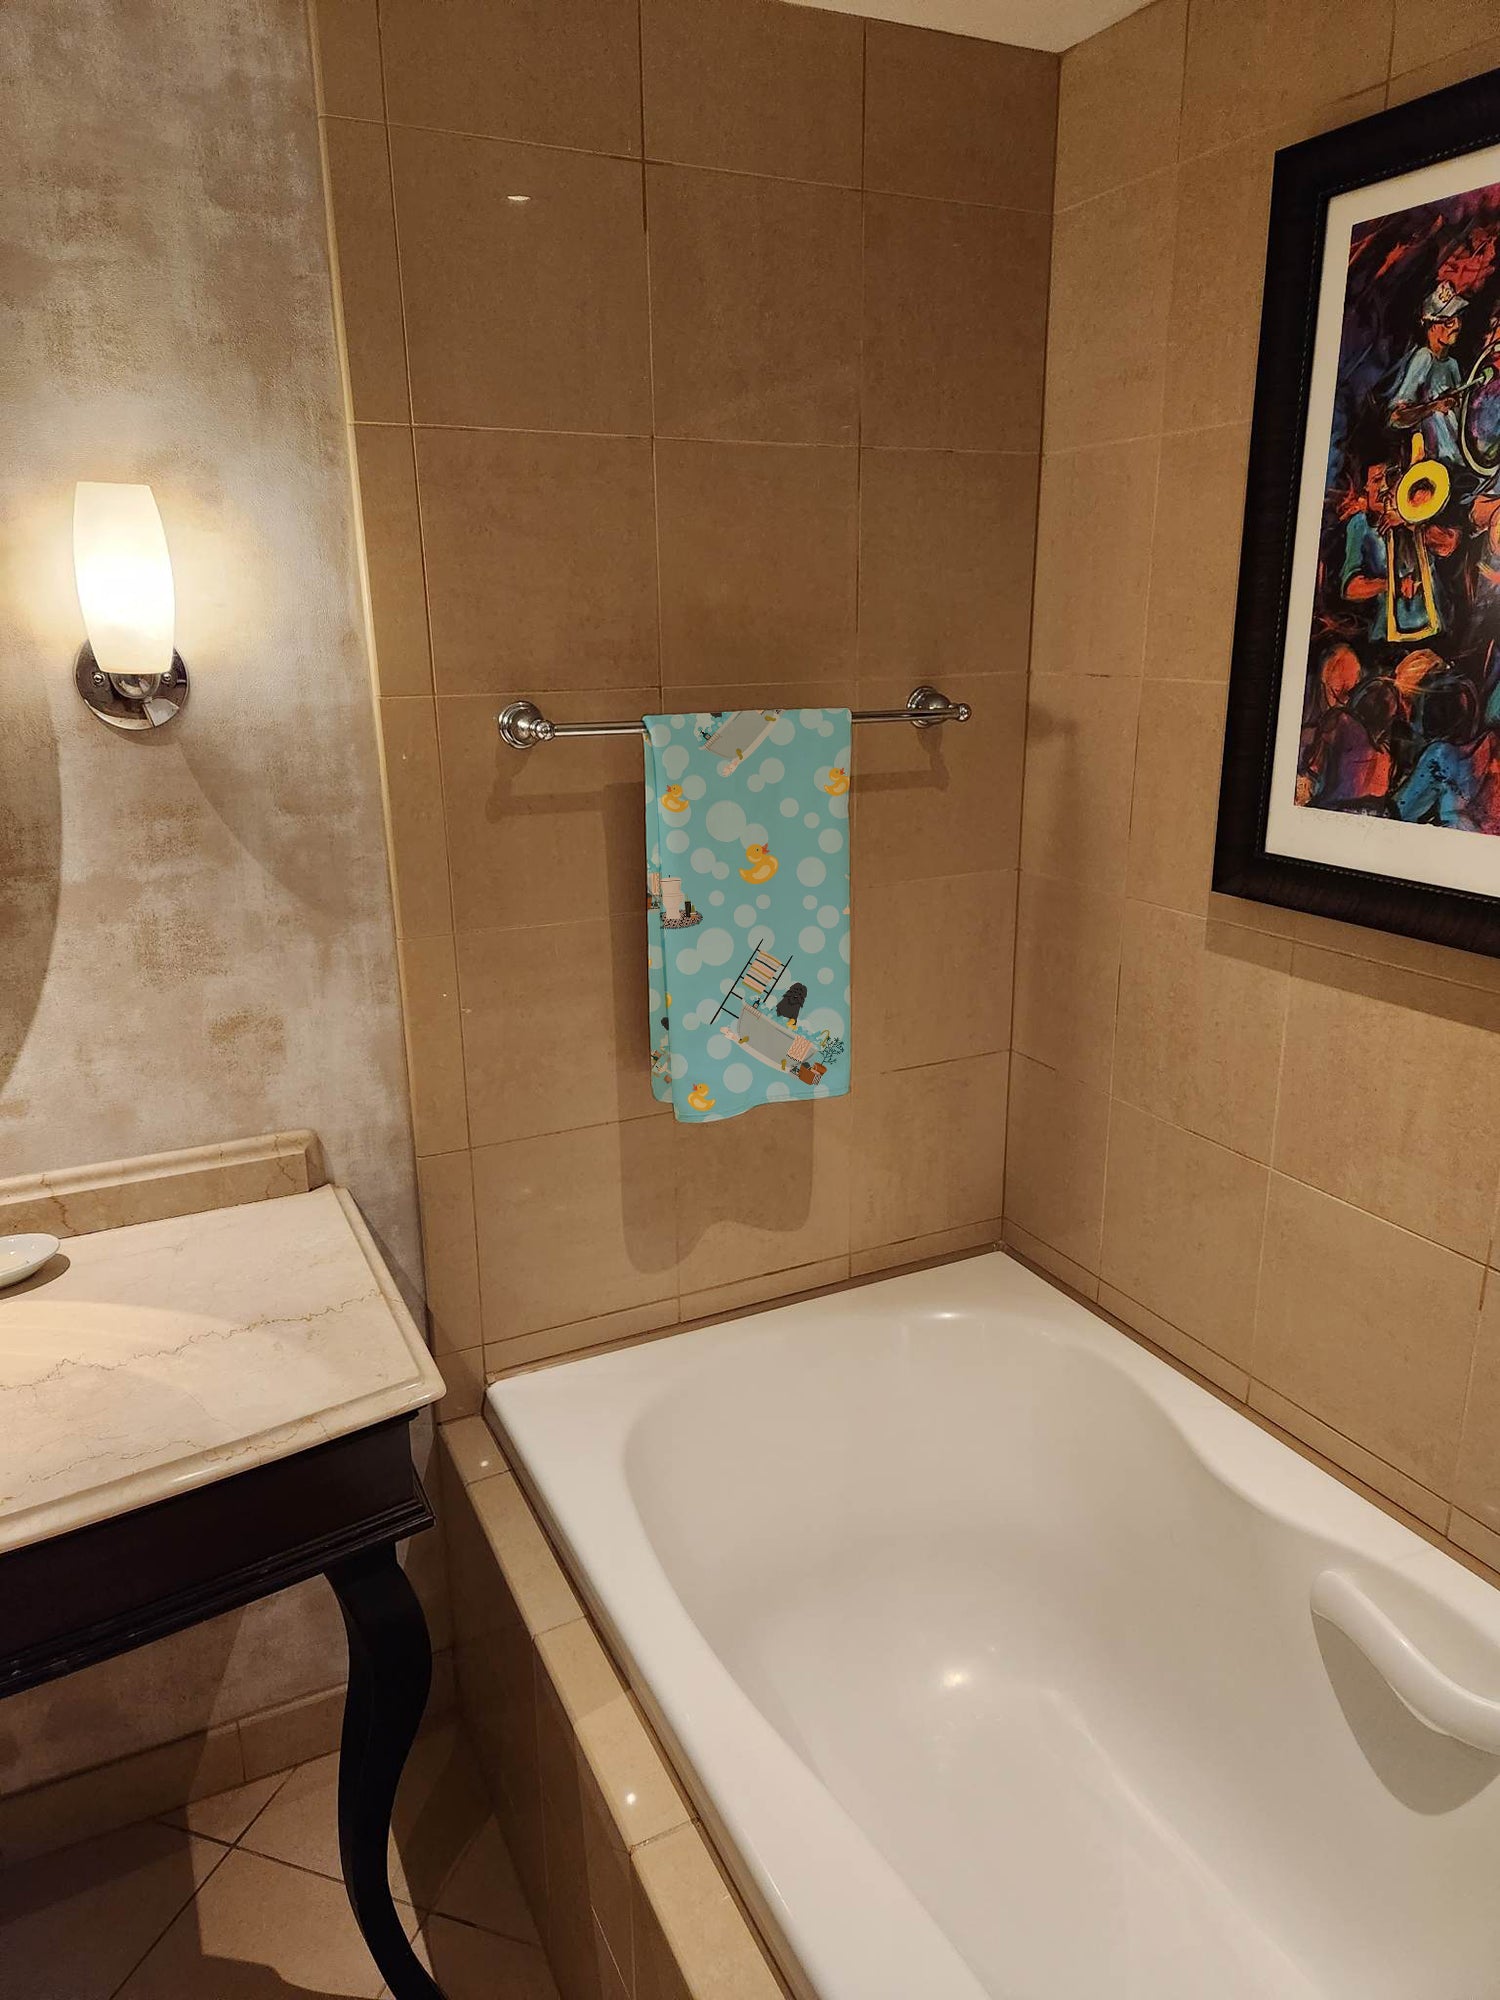 Bouvier des Flandres in Bathtub Bath Towel Large